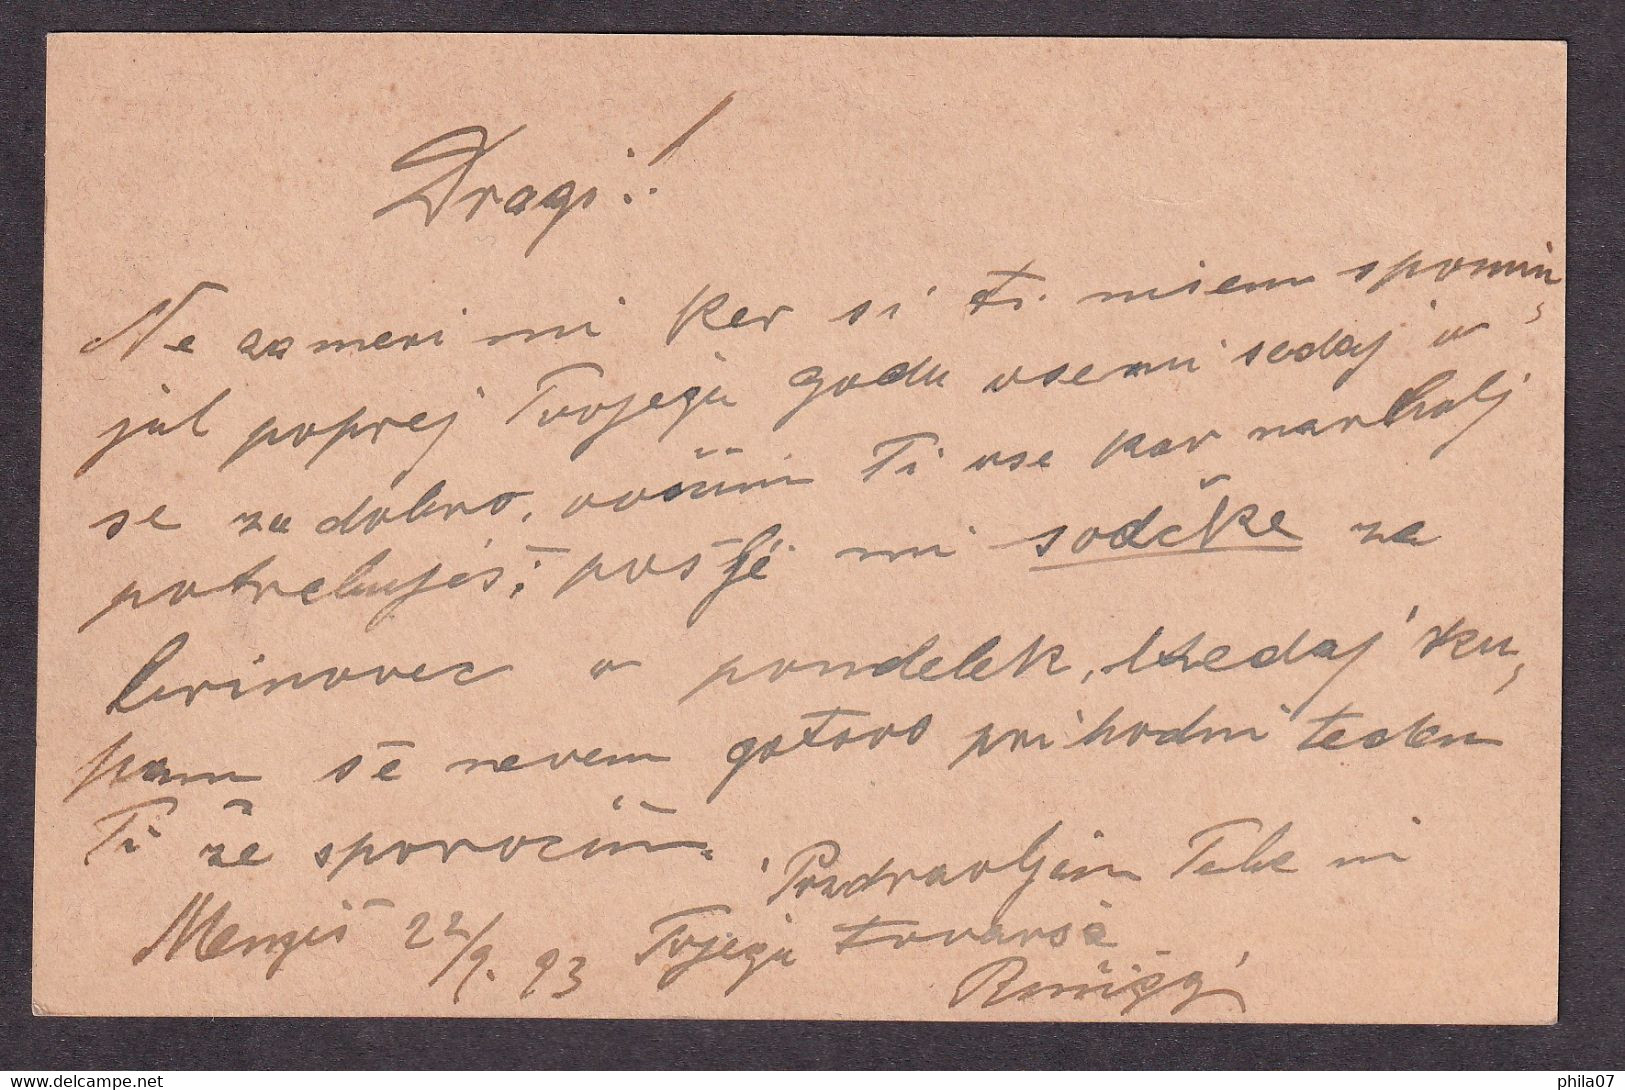 Austria/Slovenia - Stationery Sent From Mengeš To Škofja Loka 22.09.1893. Rare Cancel Of Post MANNSBURG. - Storia Postale